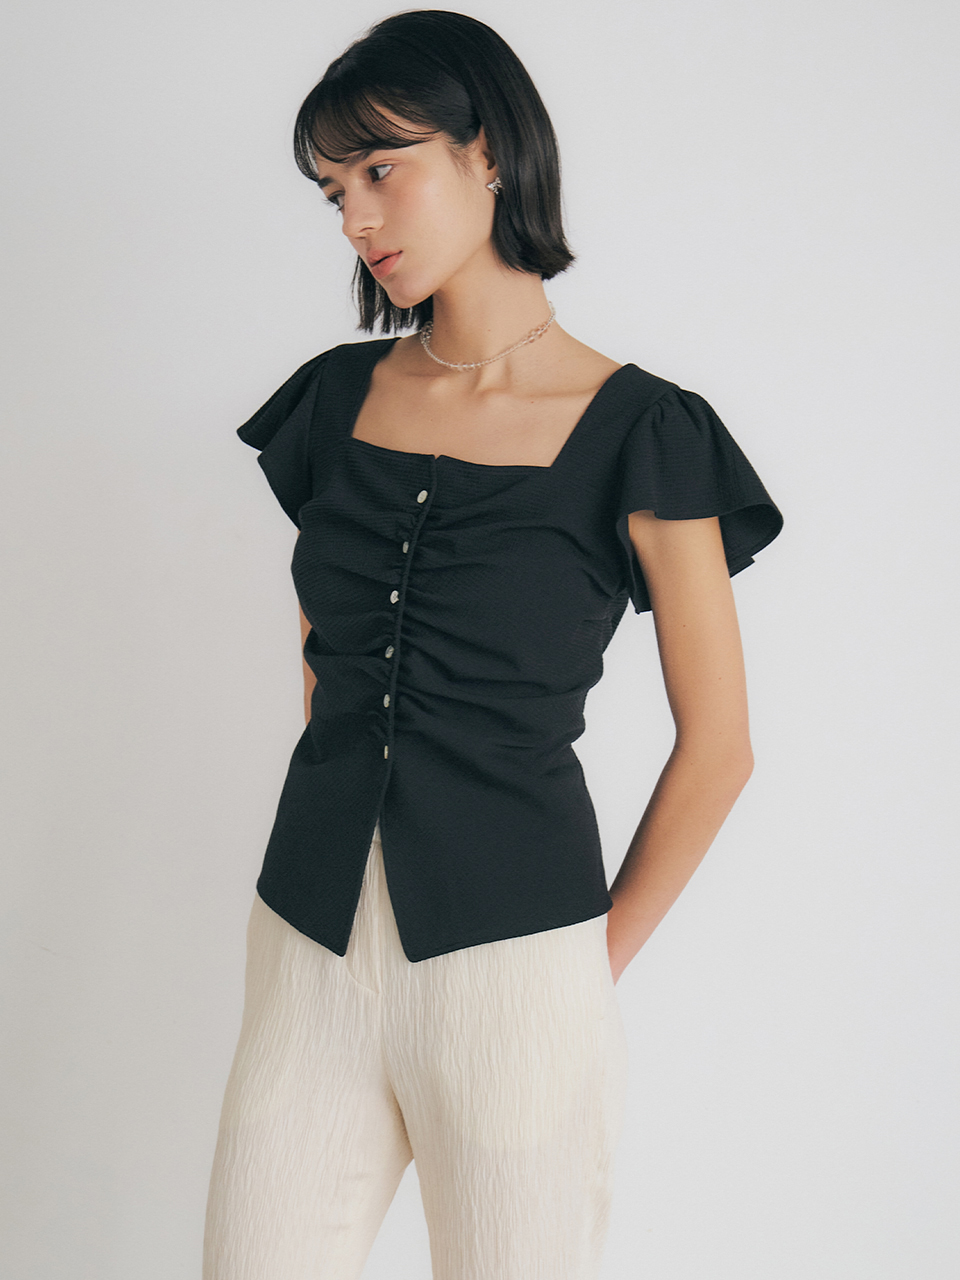 [Low in stock] ANN shirring detail square neck blouse_Black